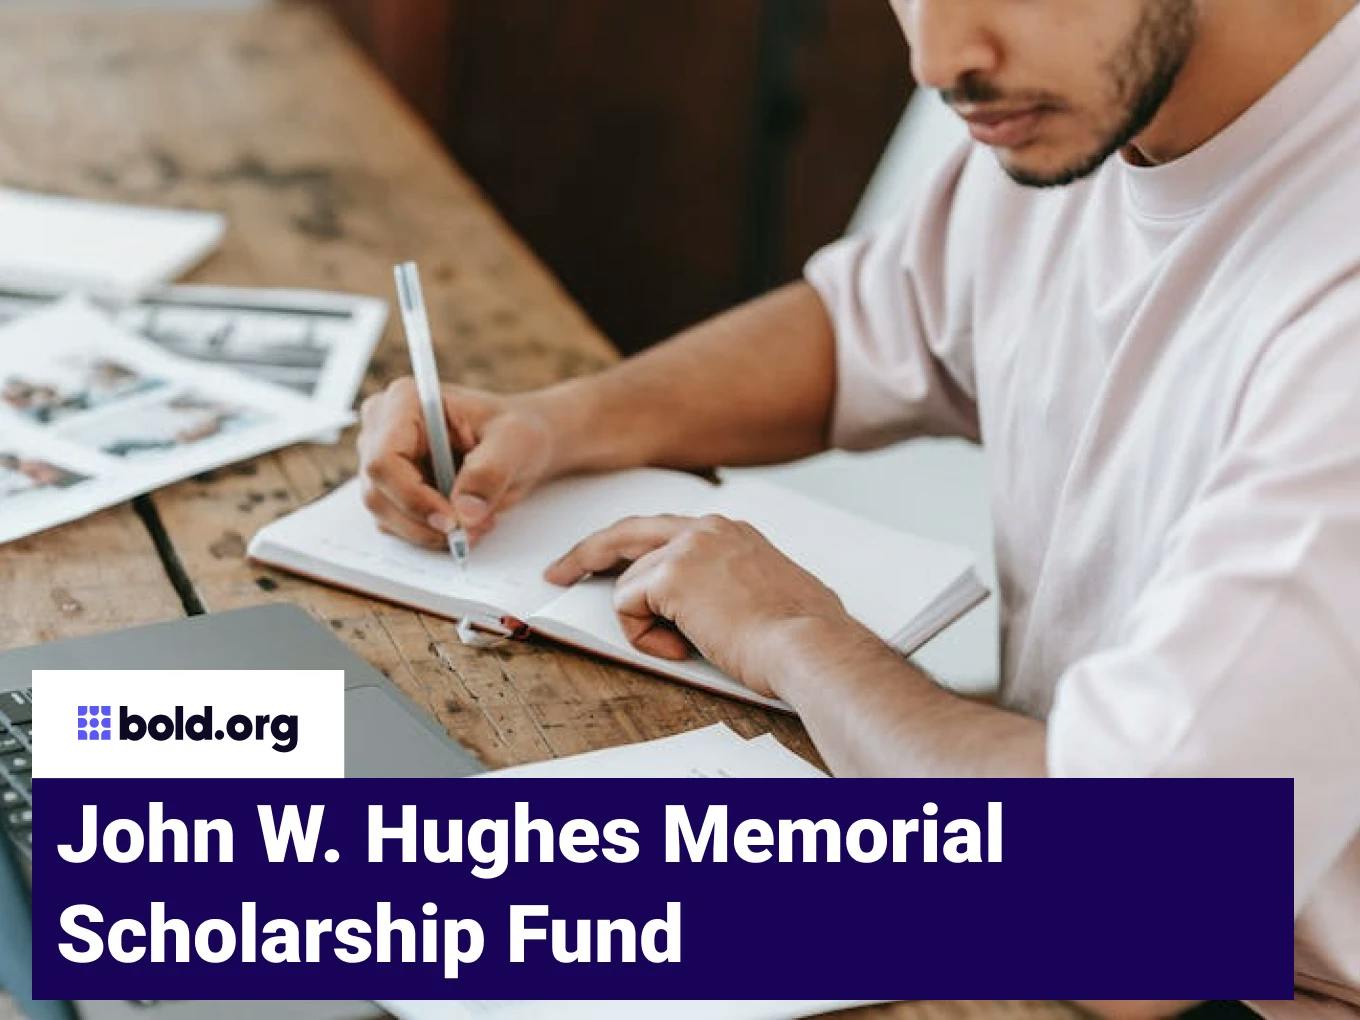 John W. Hughes Memorial Scholarship Fund